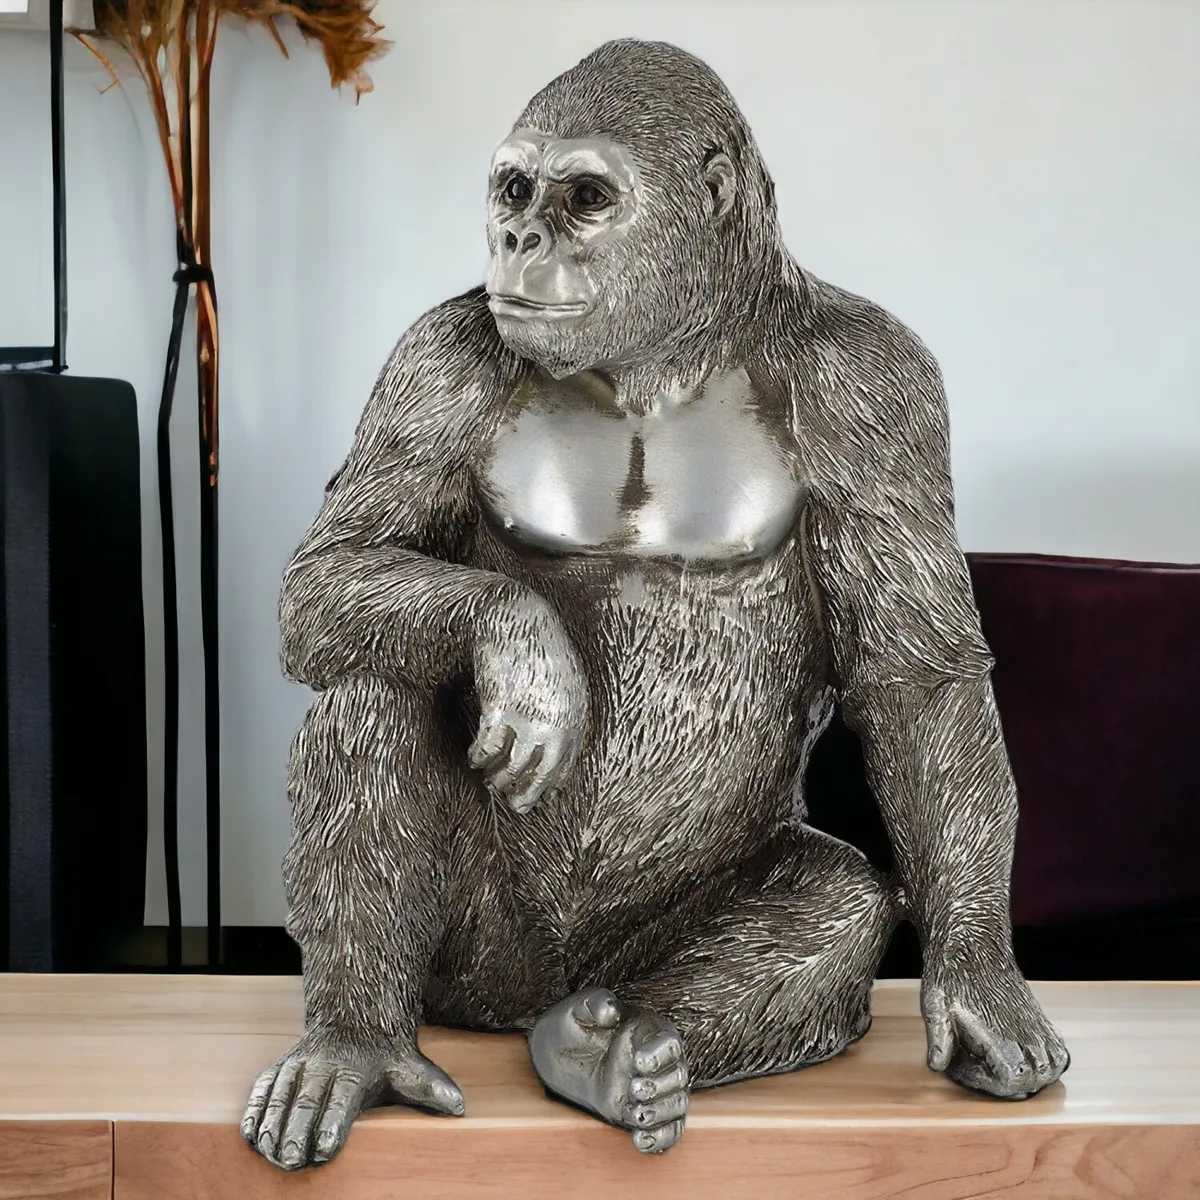 Contemplative Gorilla Statue - Reflective Primate Decorative Sculpture